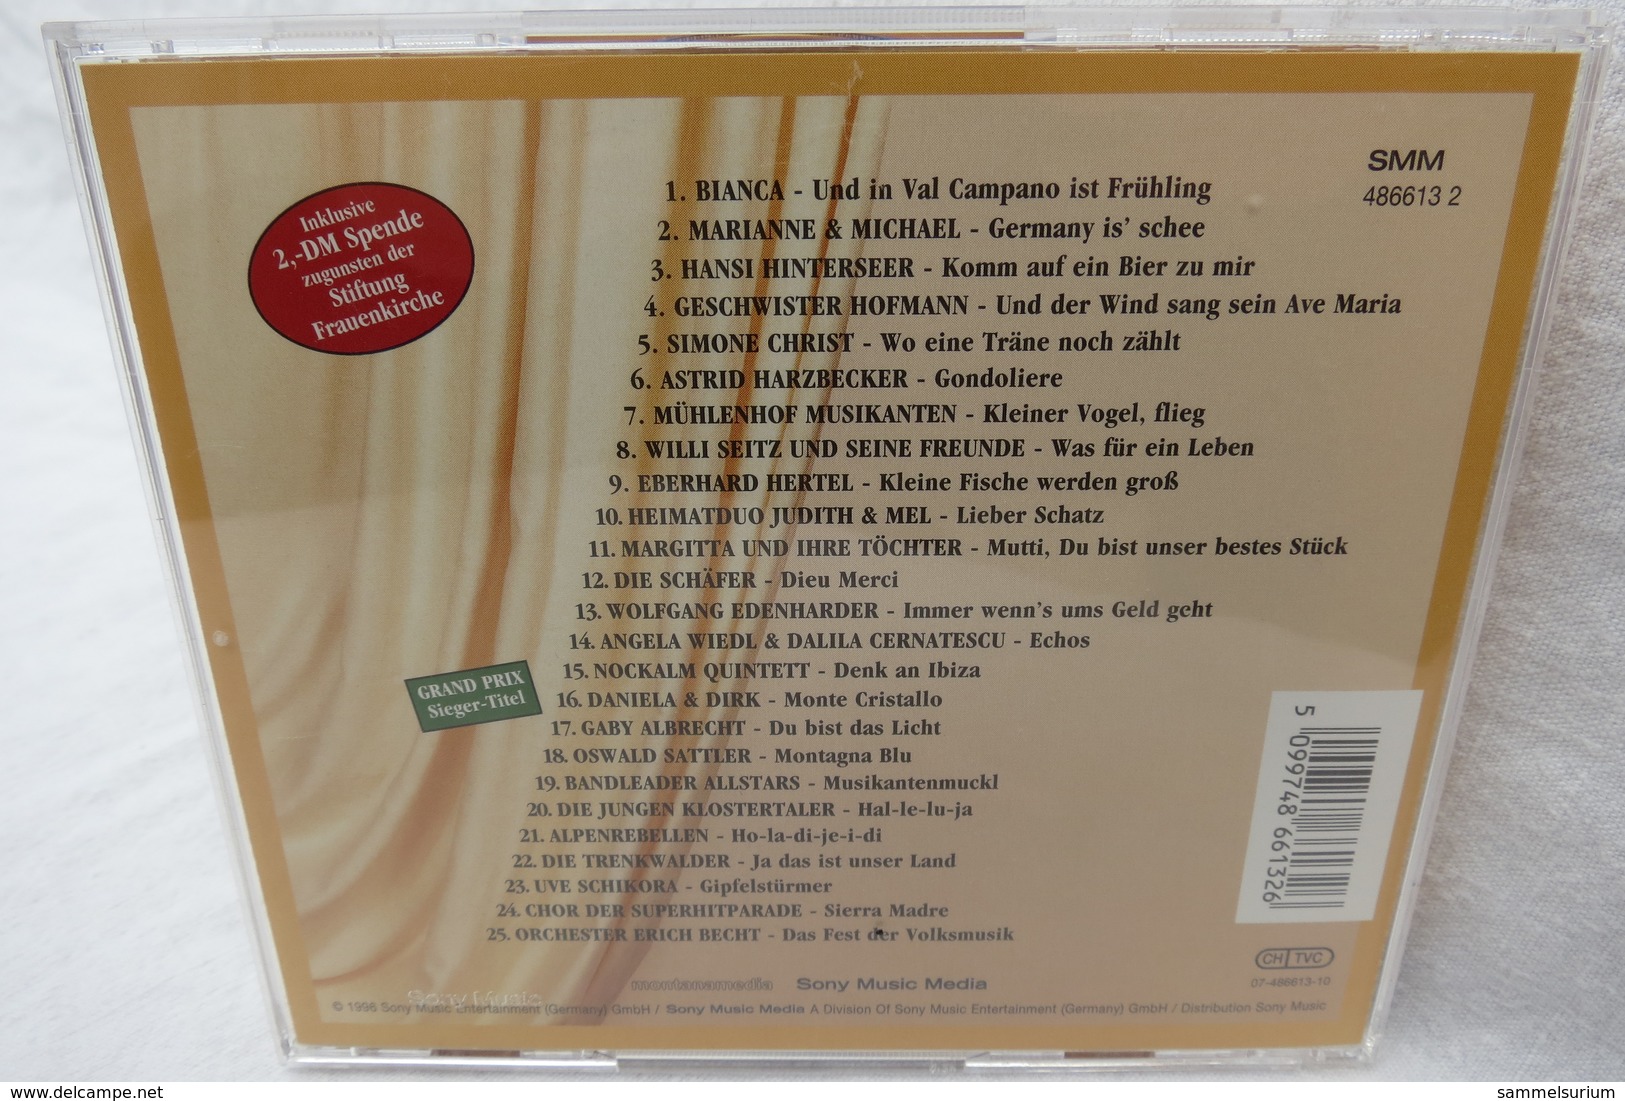 CD "Super-Hitparade Der Volksmusik" Hits Des Jahres 1996, Vorgestellt Von Carolin Reiber - Andere - Duitstalig